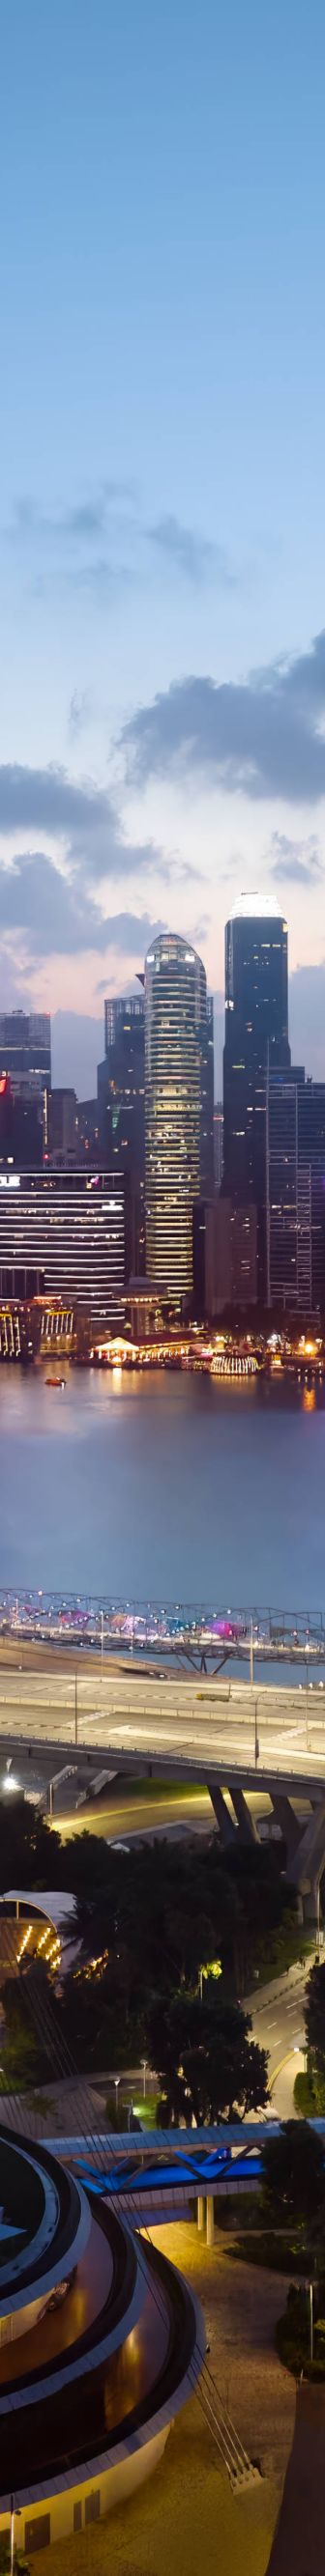 Marina Bay, city view, Singapore Flyer, location